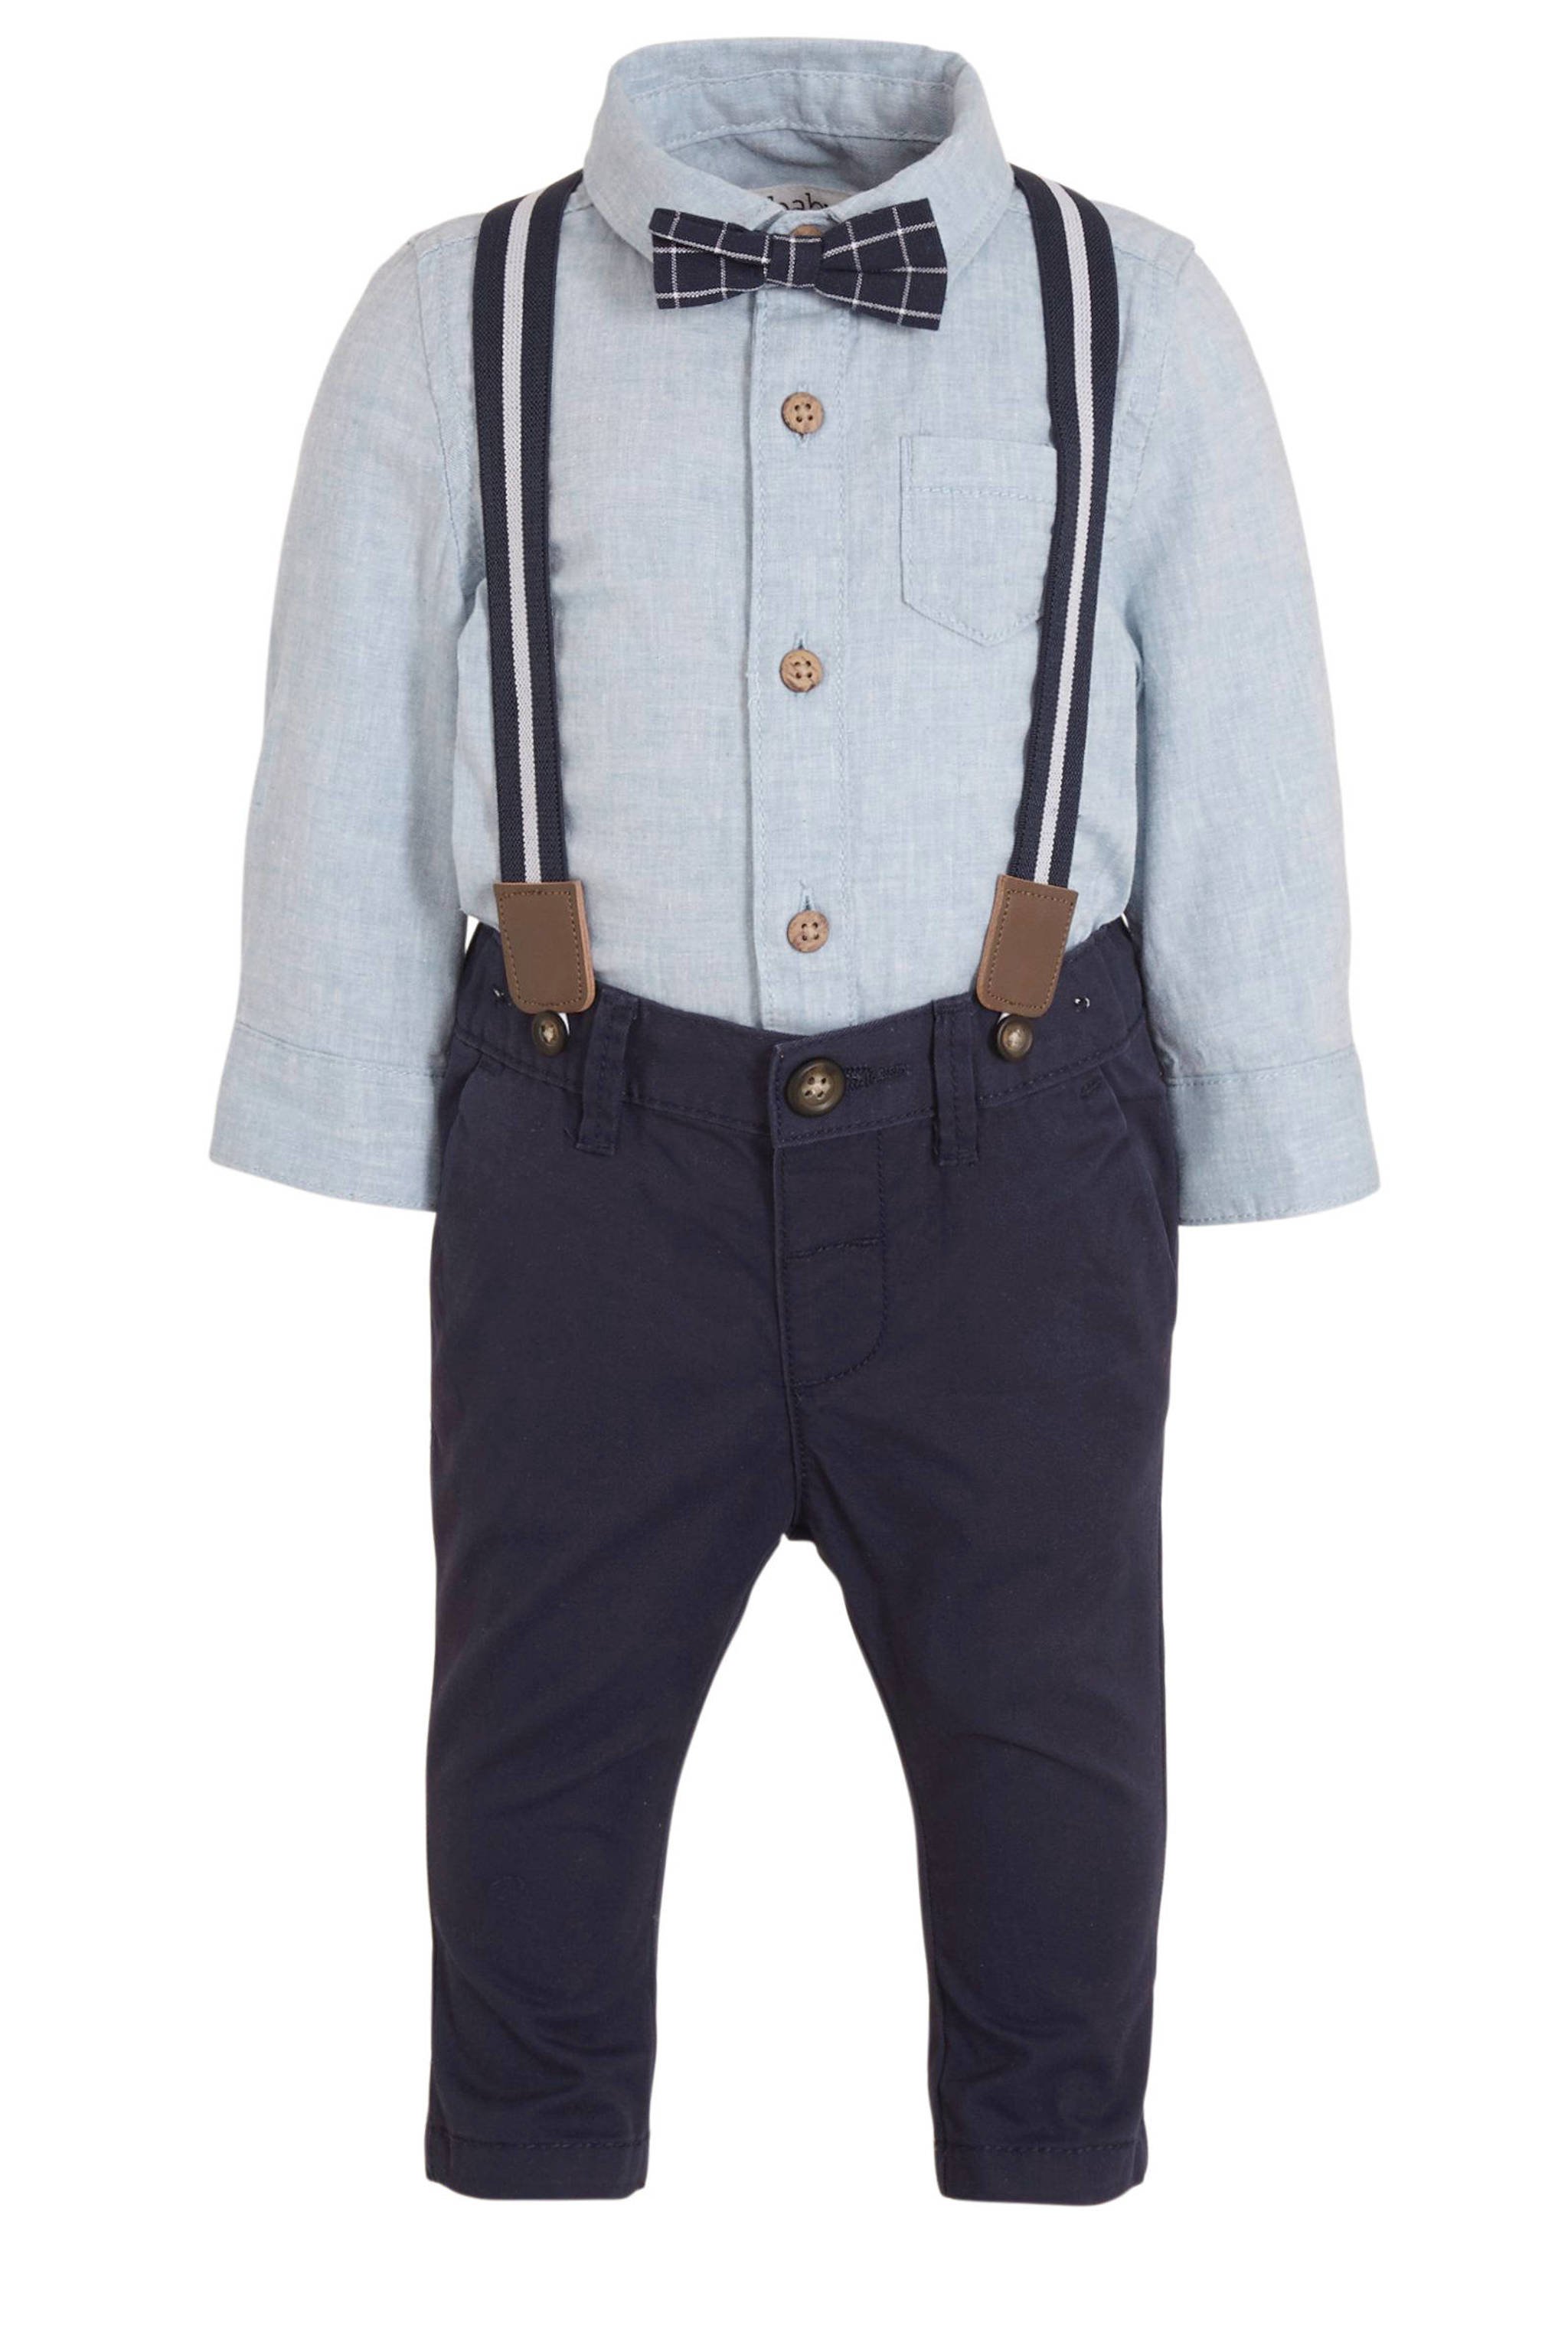 mosterd bezig prins C&A Baby Club overhemd + broek met strik en bretels - set van 4  lichtblauw/donkerblauw | wehkamp